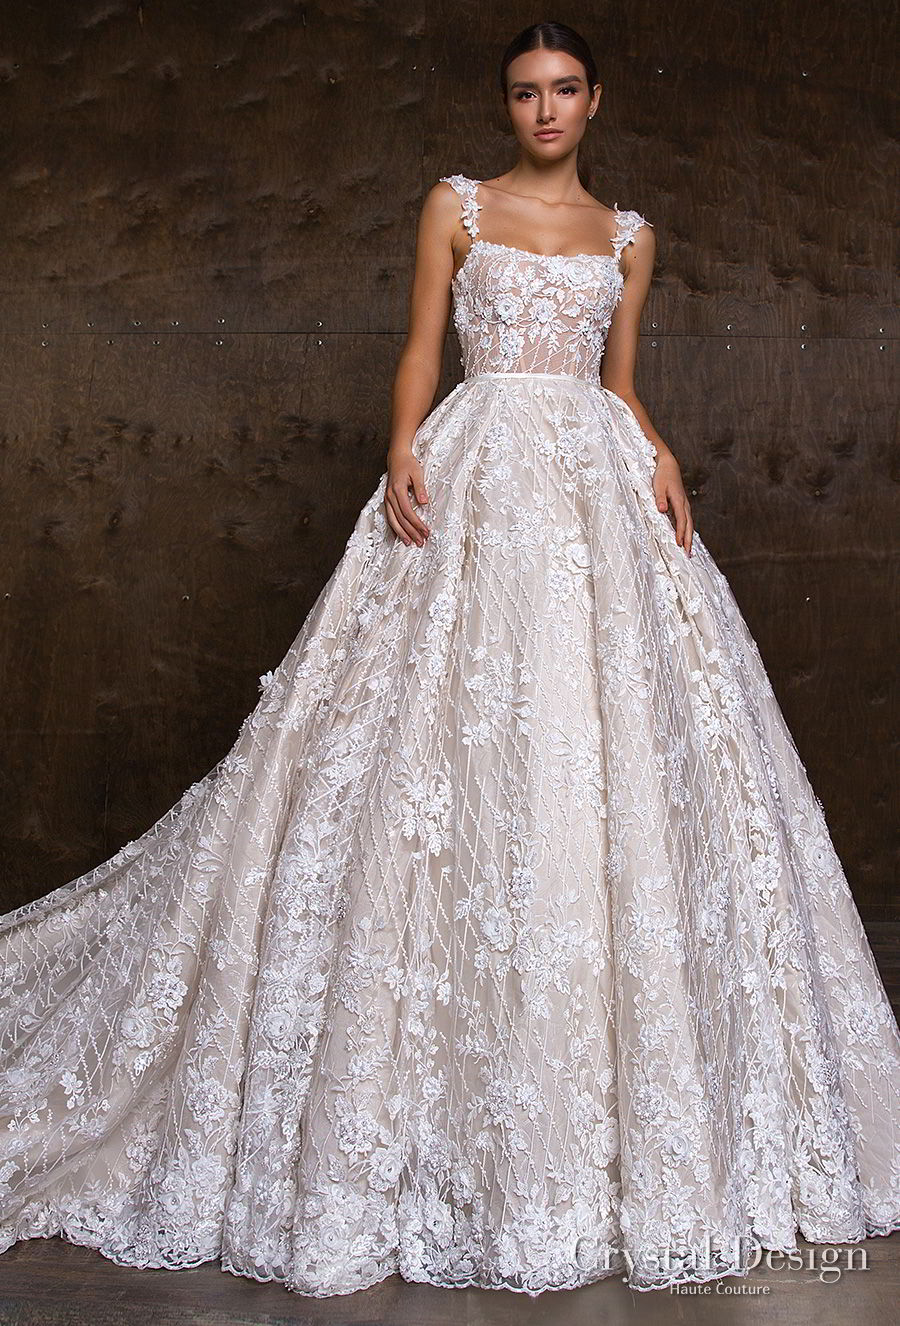 crystal design 2018 sleeveless lace strap straight across full embellishment ball gown wedding dress royal train (hloya) mv